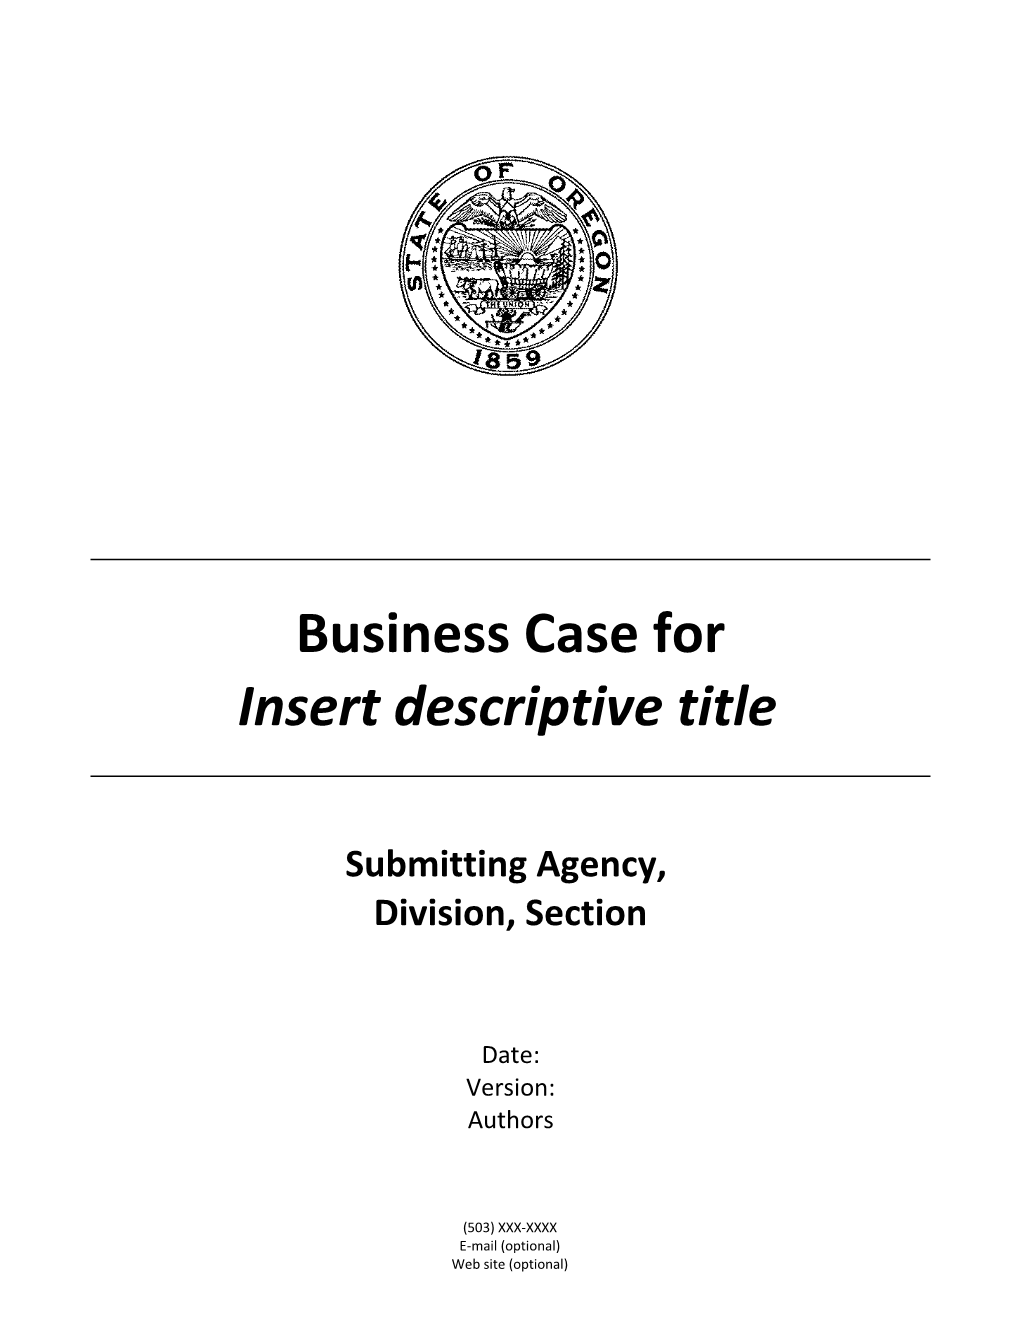 Business Case Document